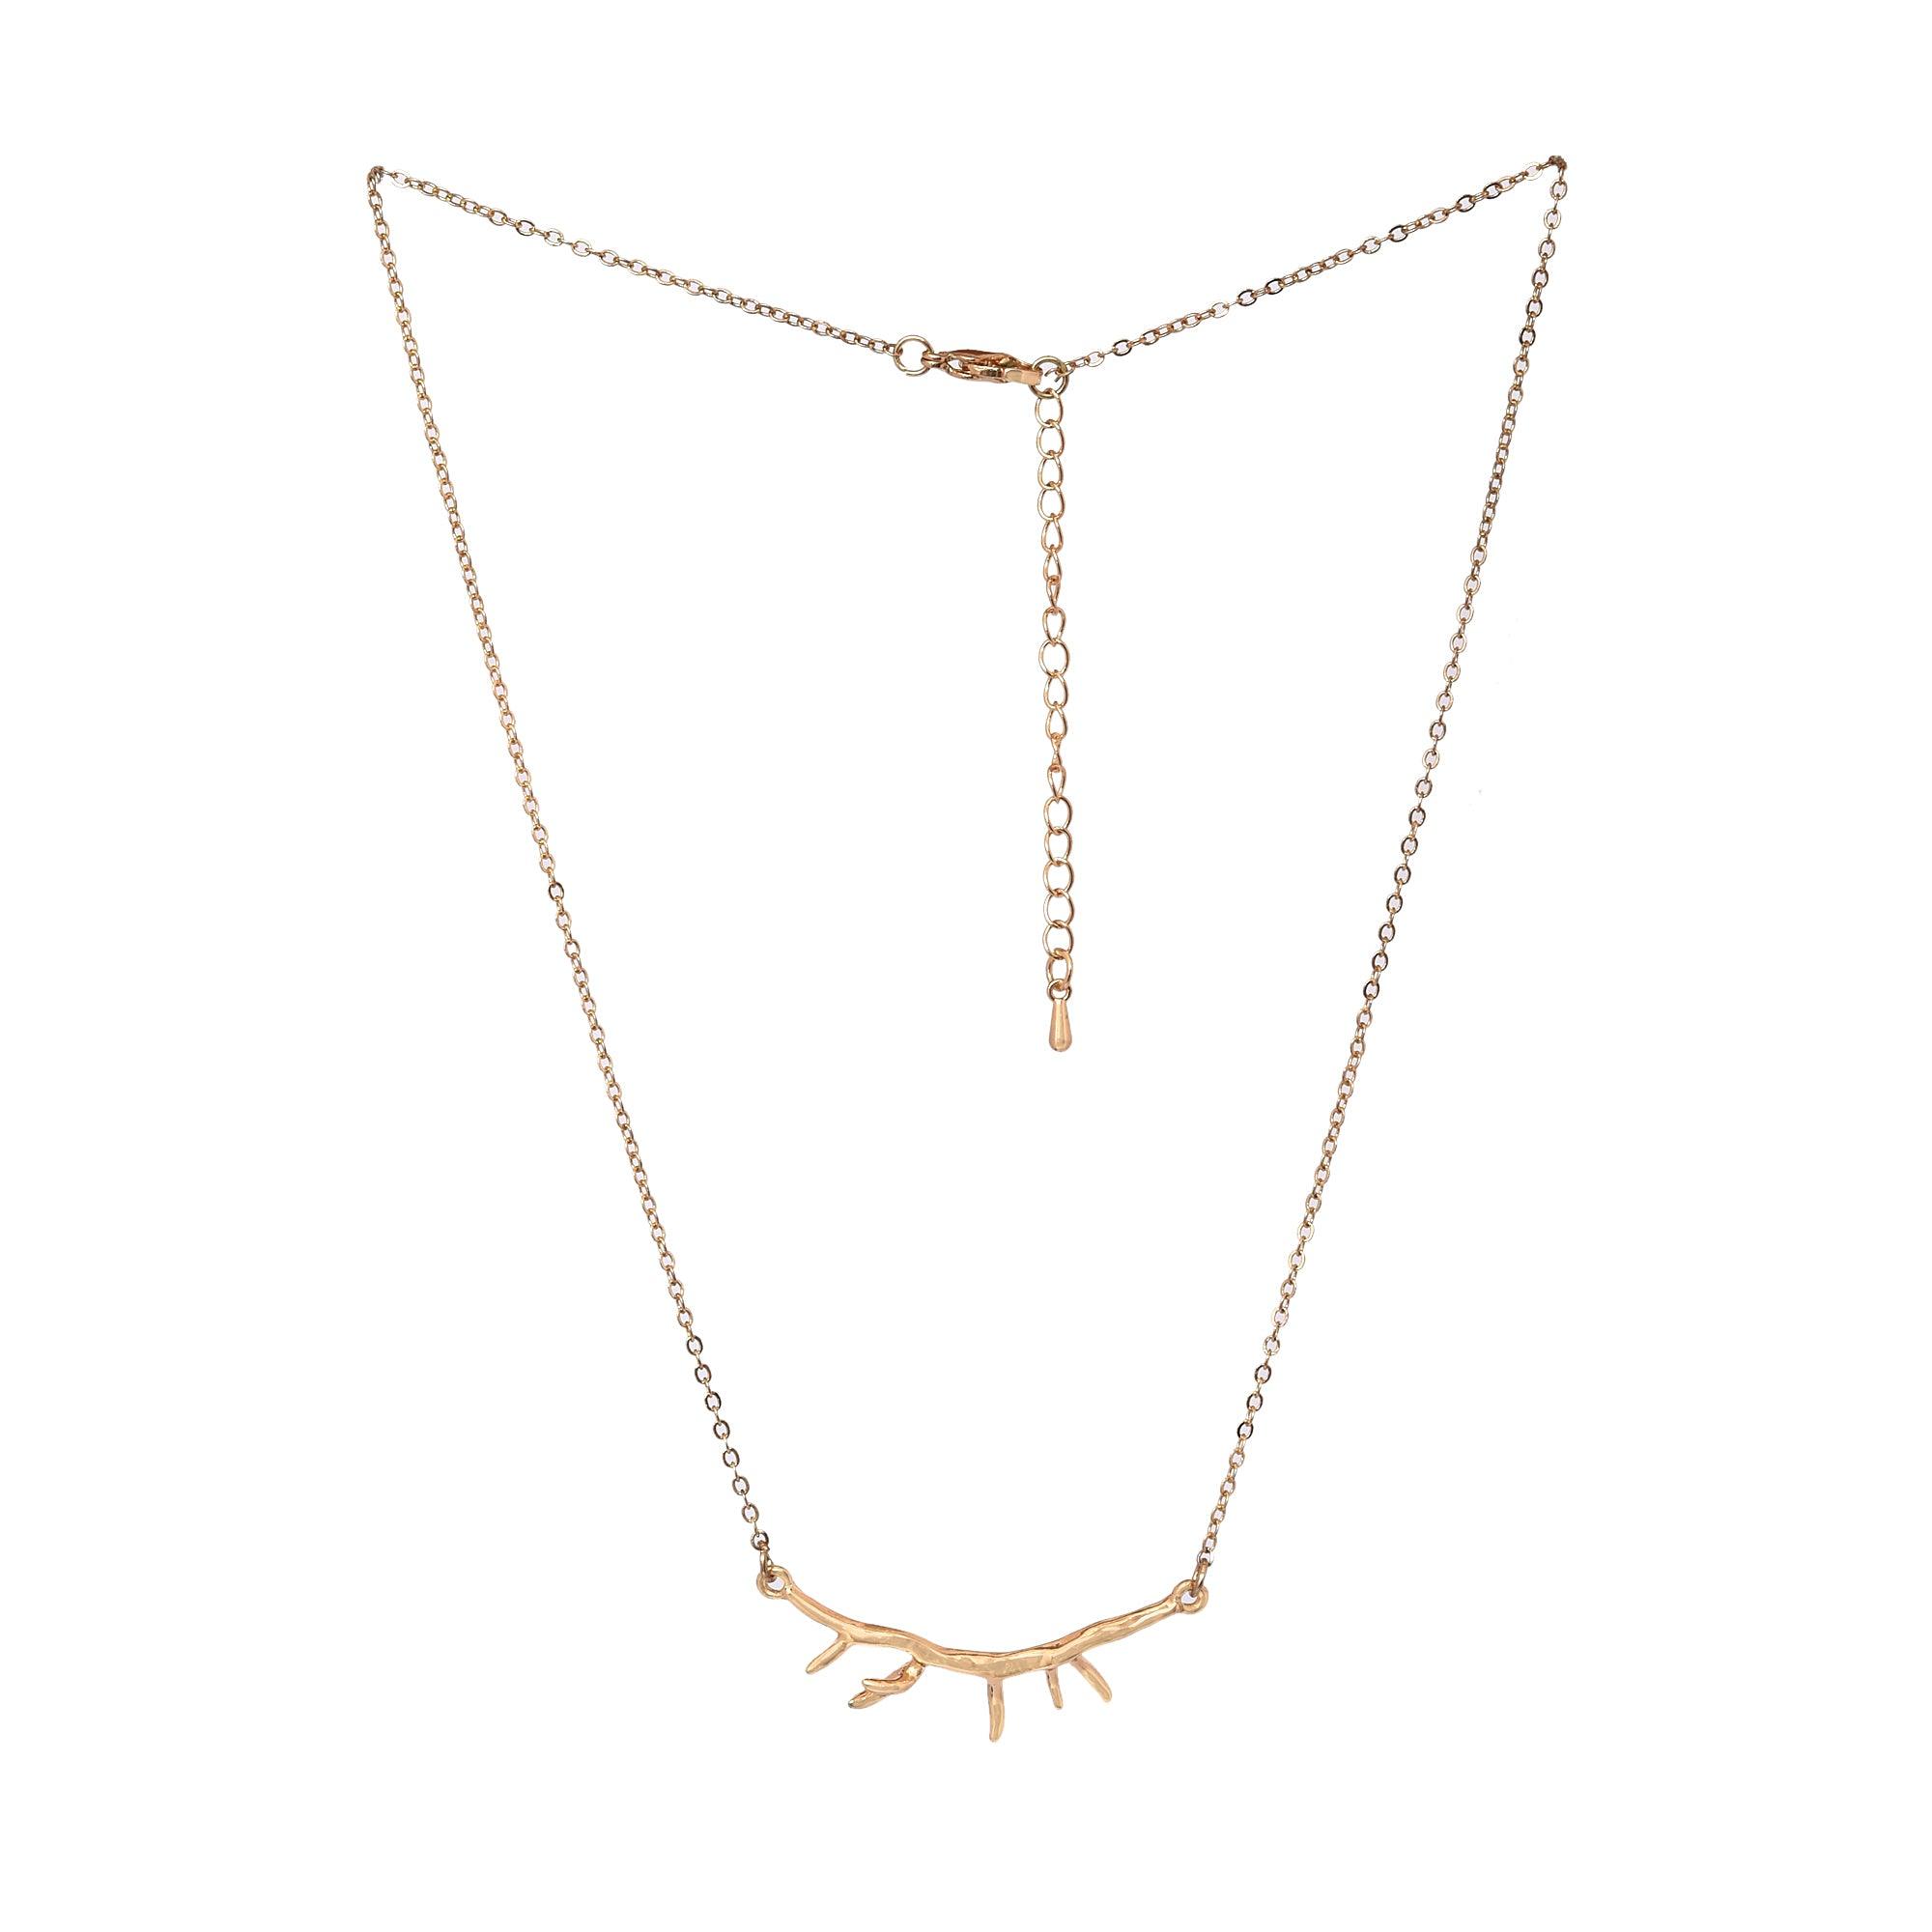 Trendy golden princess necklace with deer antler pendant - The Fineworld